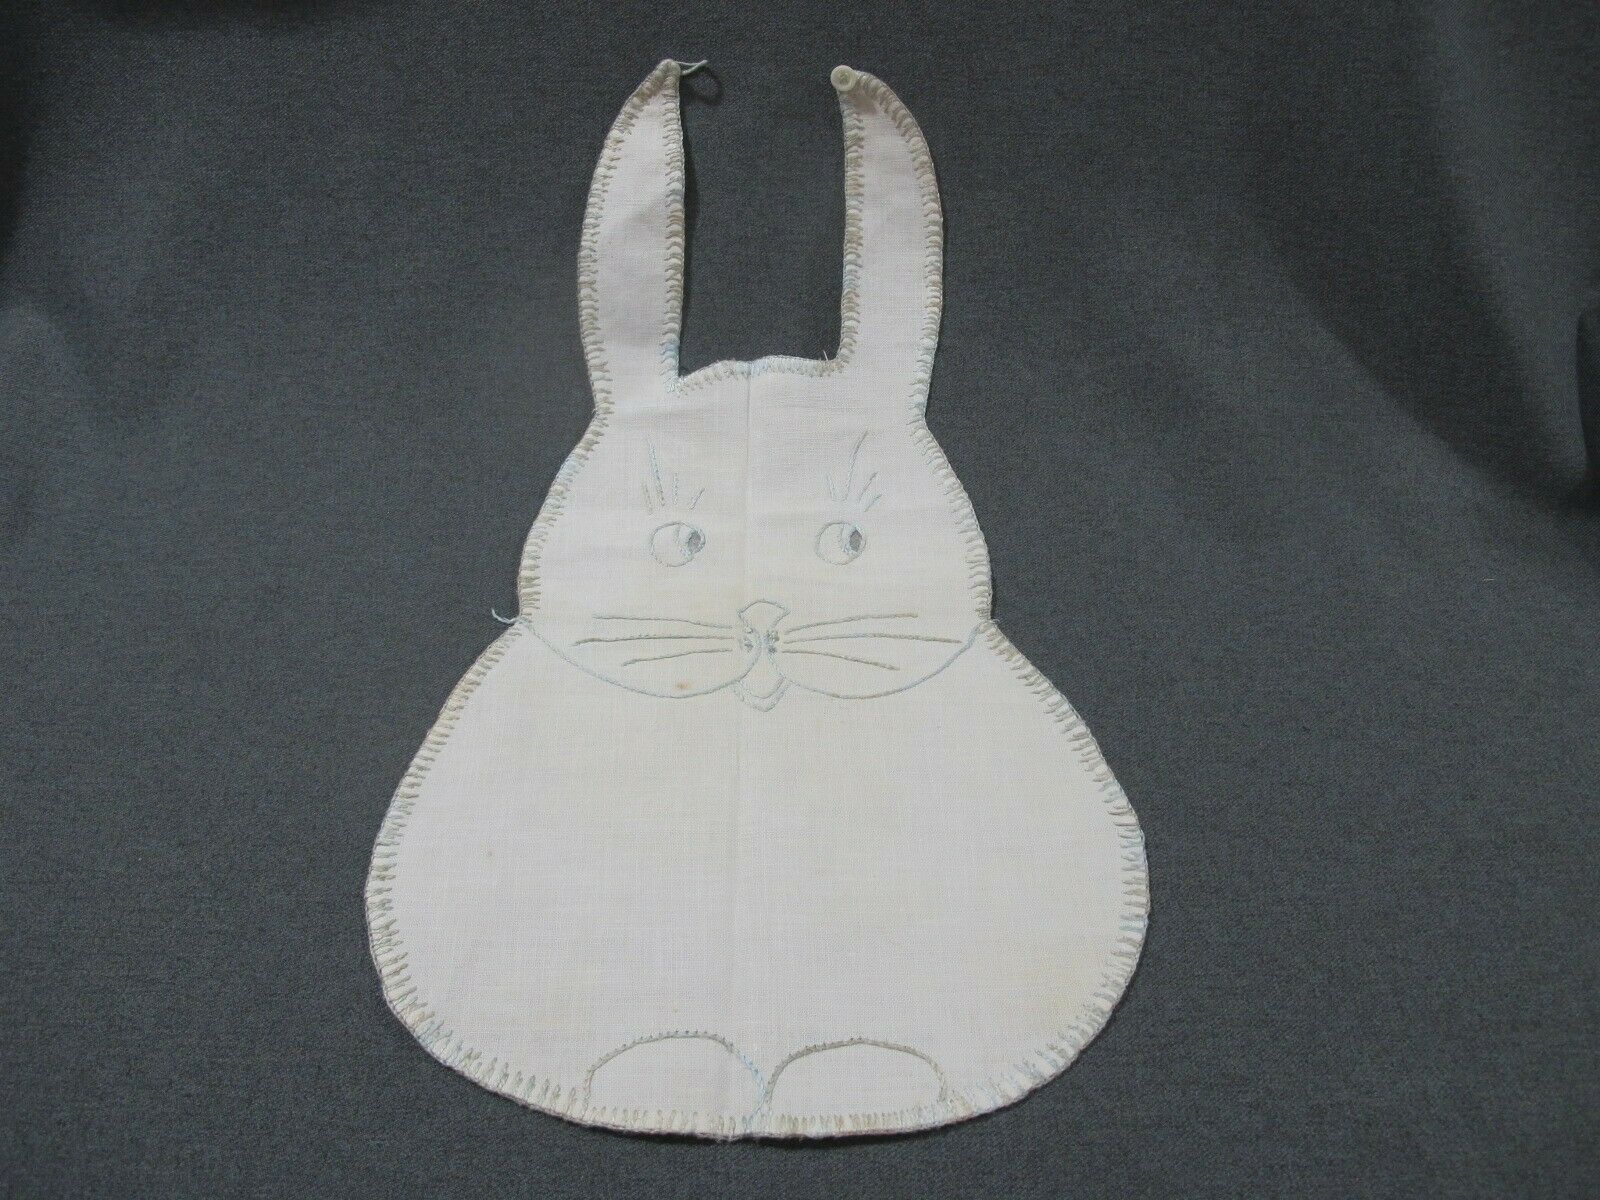 Vintage embroidery skyblue threads creamy fabric bunny rabbit shaped baby bib